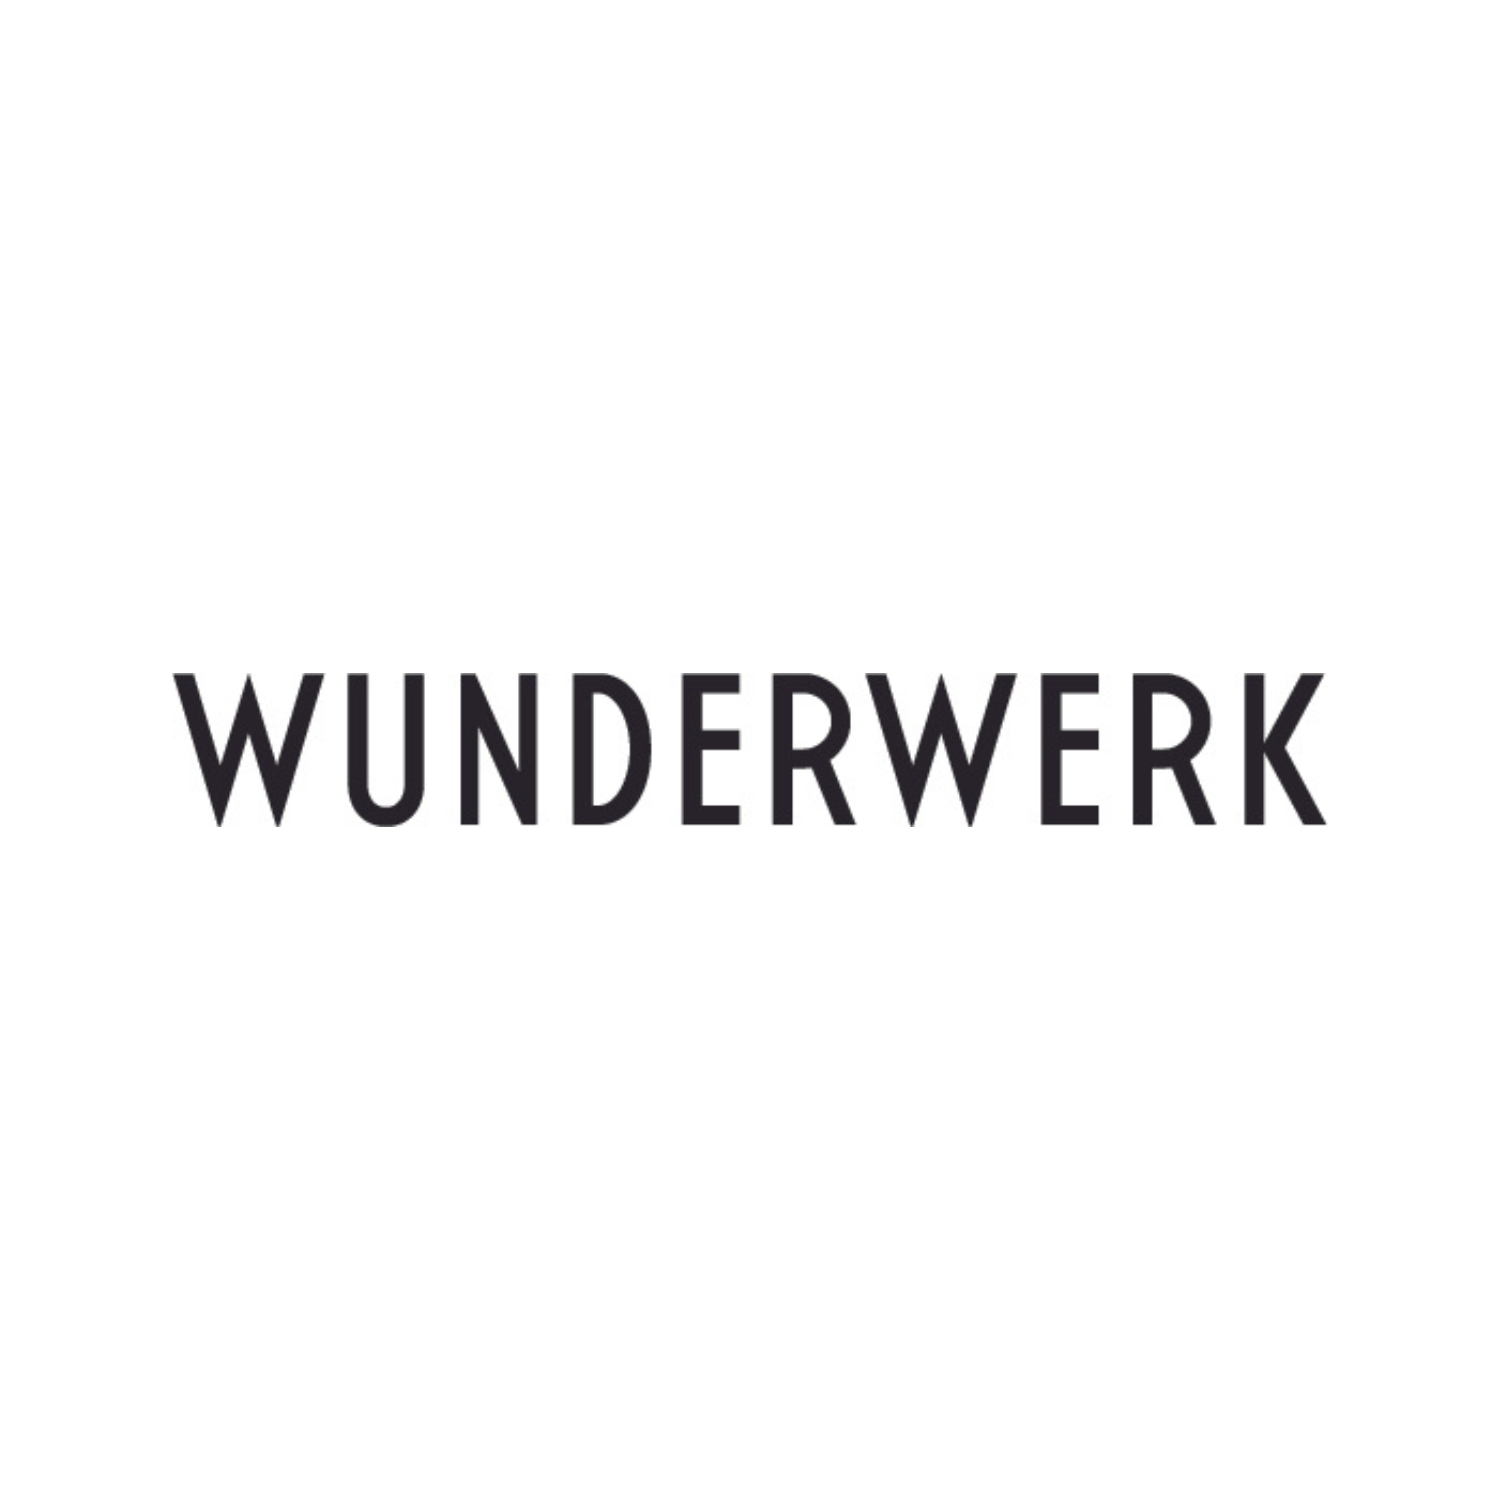 Logo Wunderwerk